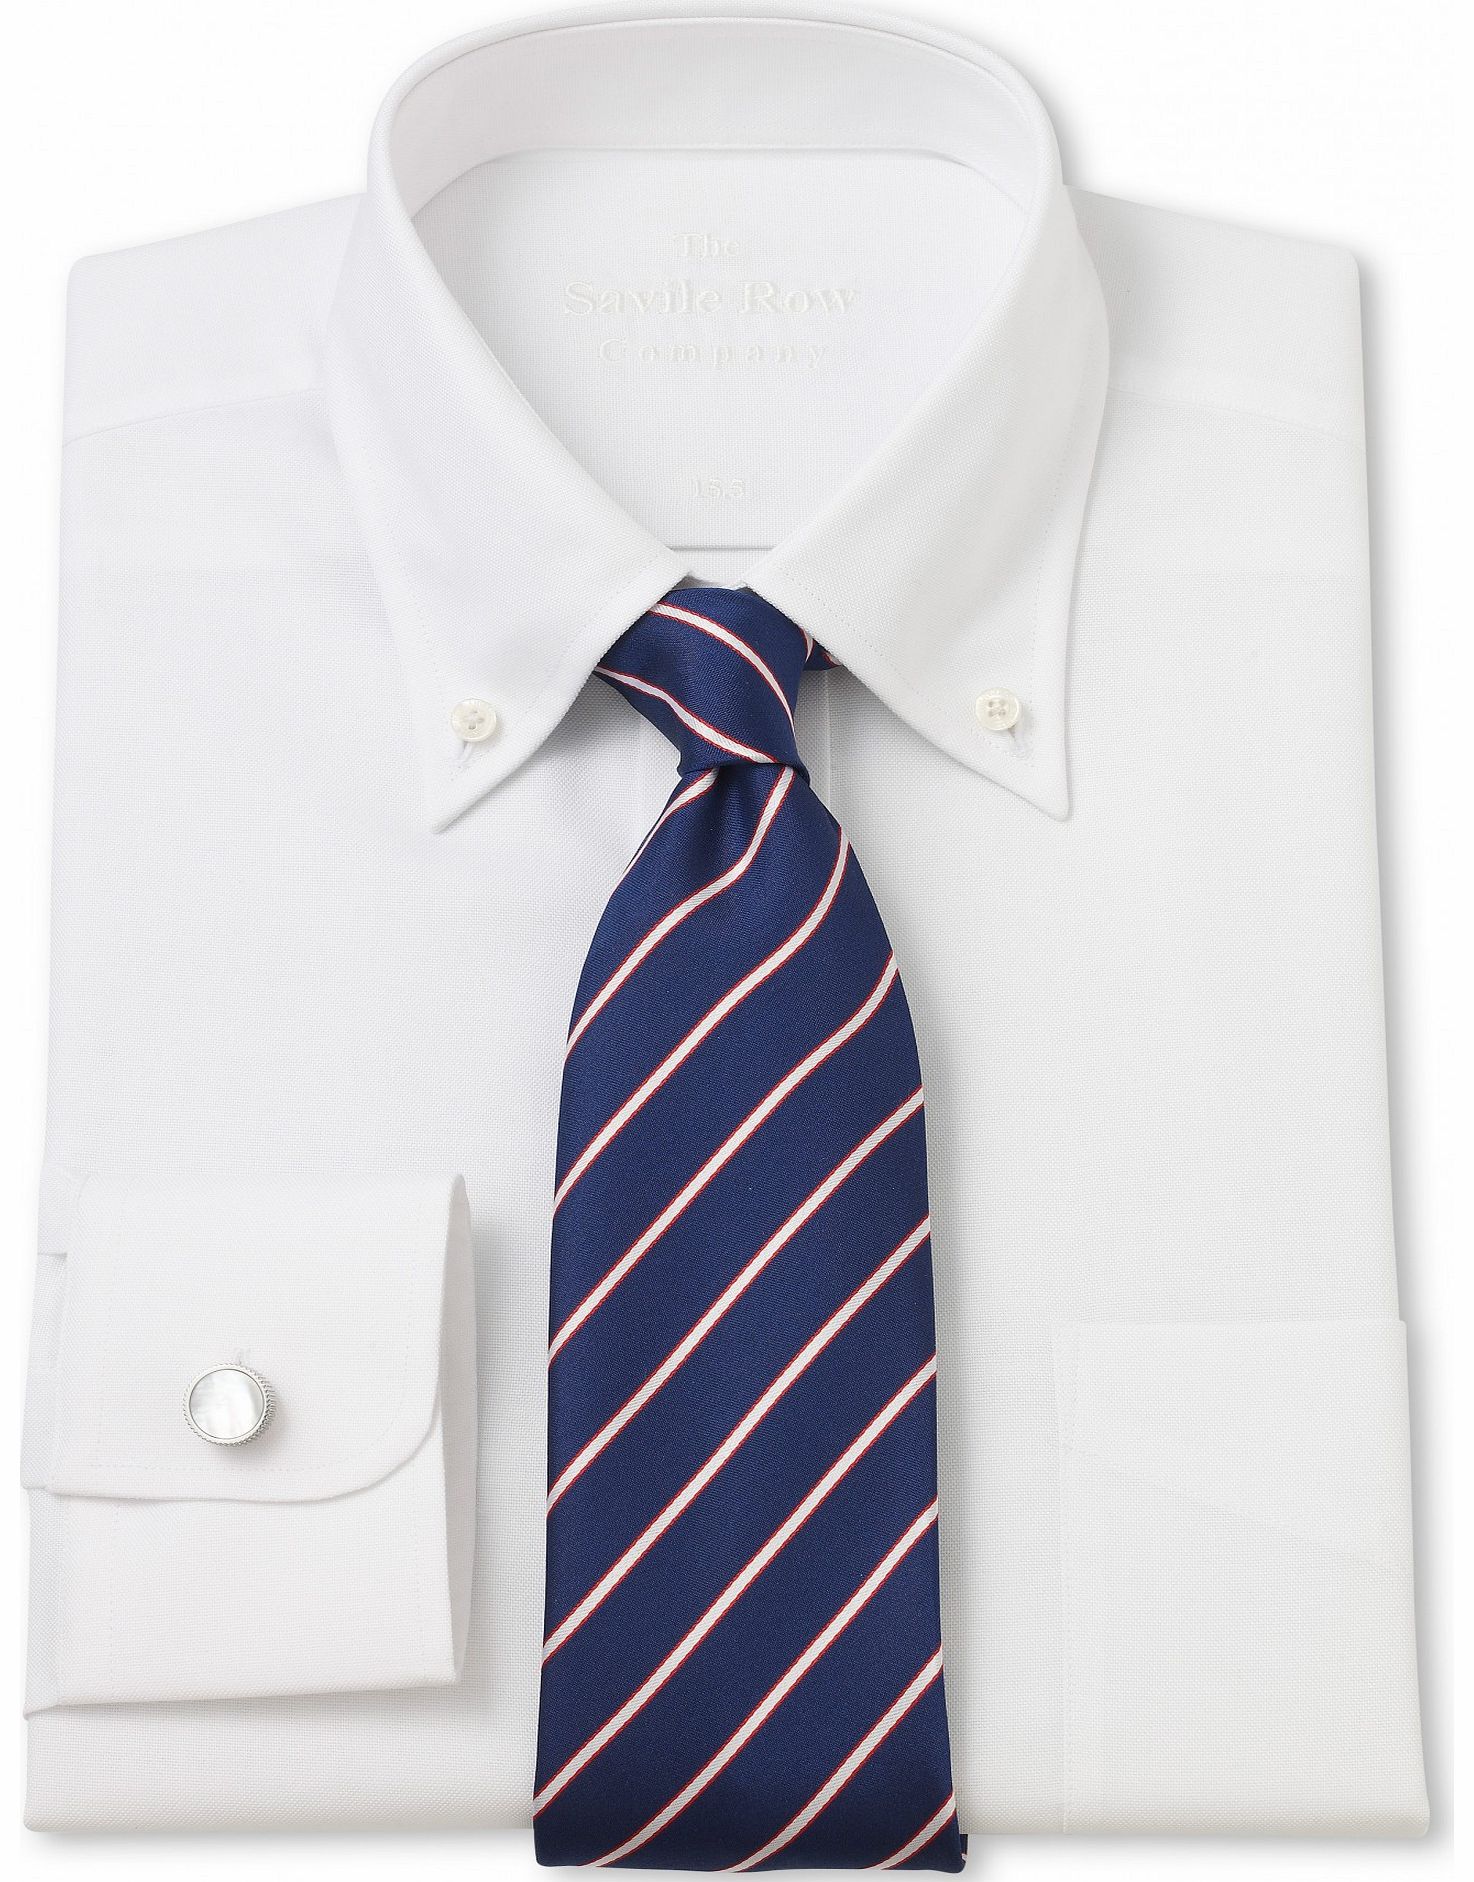 Savile Row Company White Oxford Button Down Classic Shirt 15``